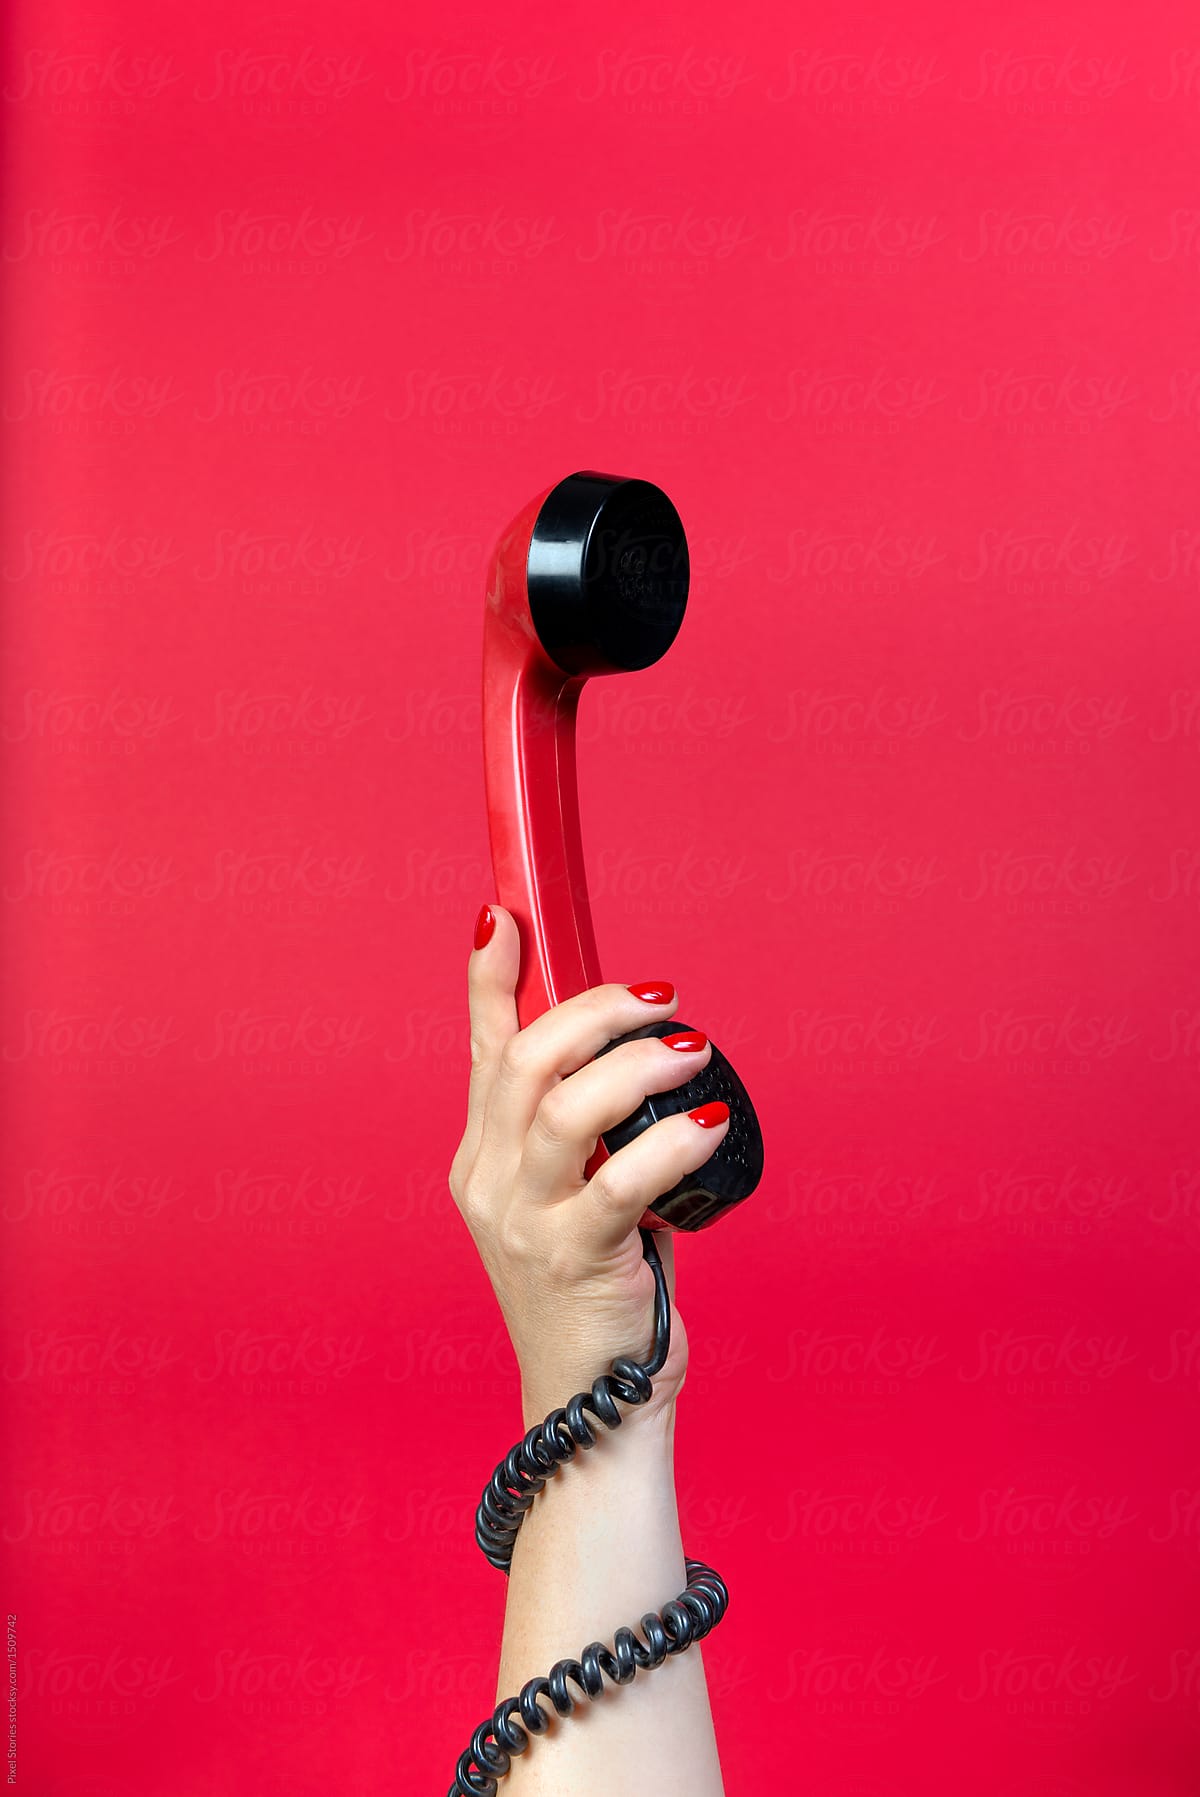 Hand holding red rotary phone